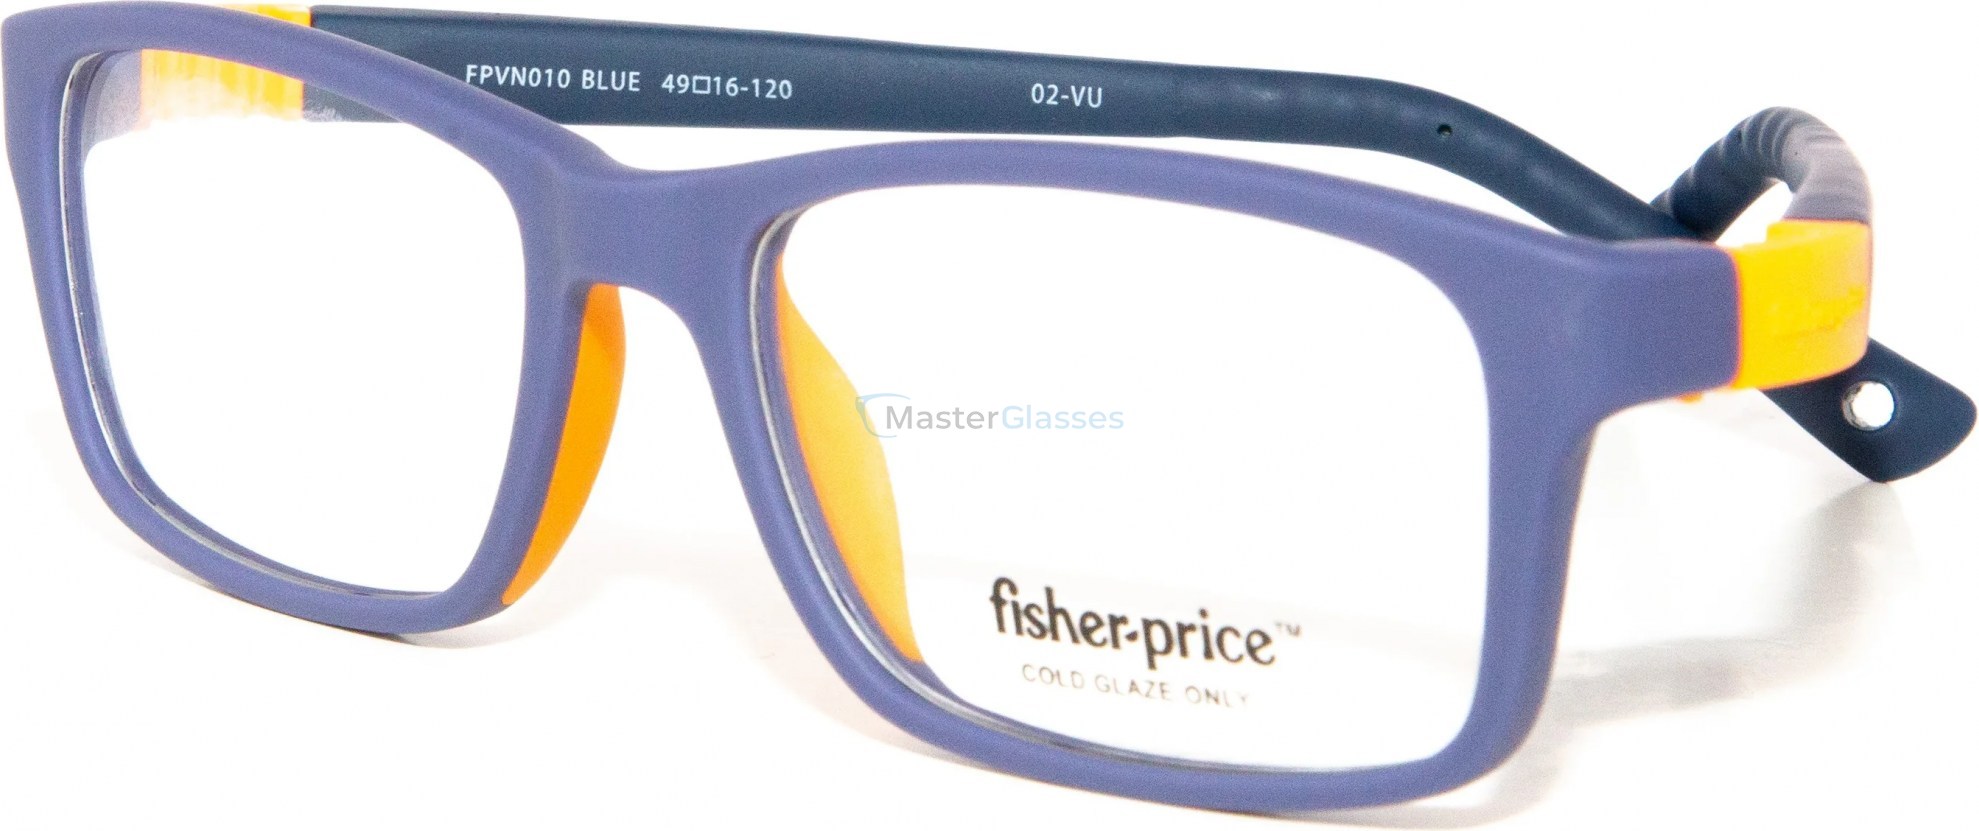  Fisher-Price FPVN010 BLUE 49-16-120